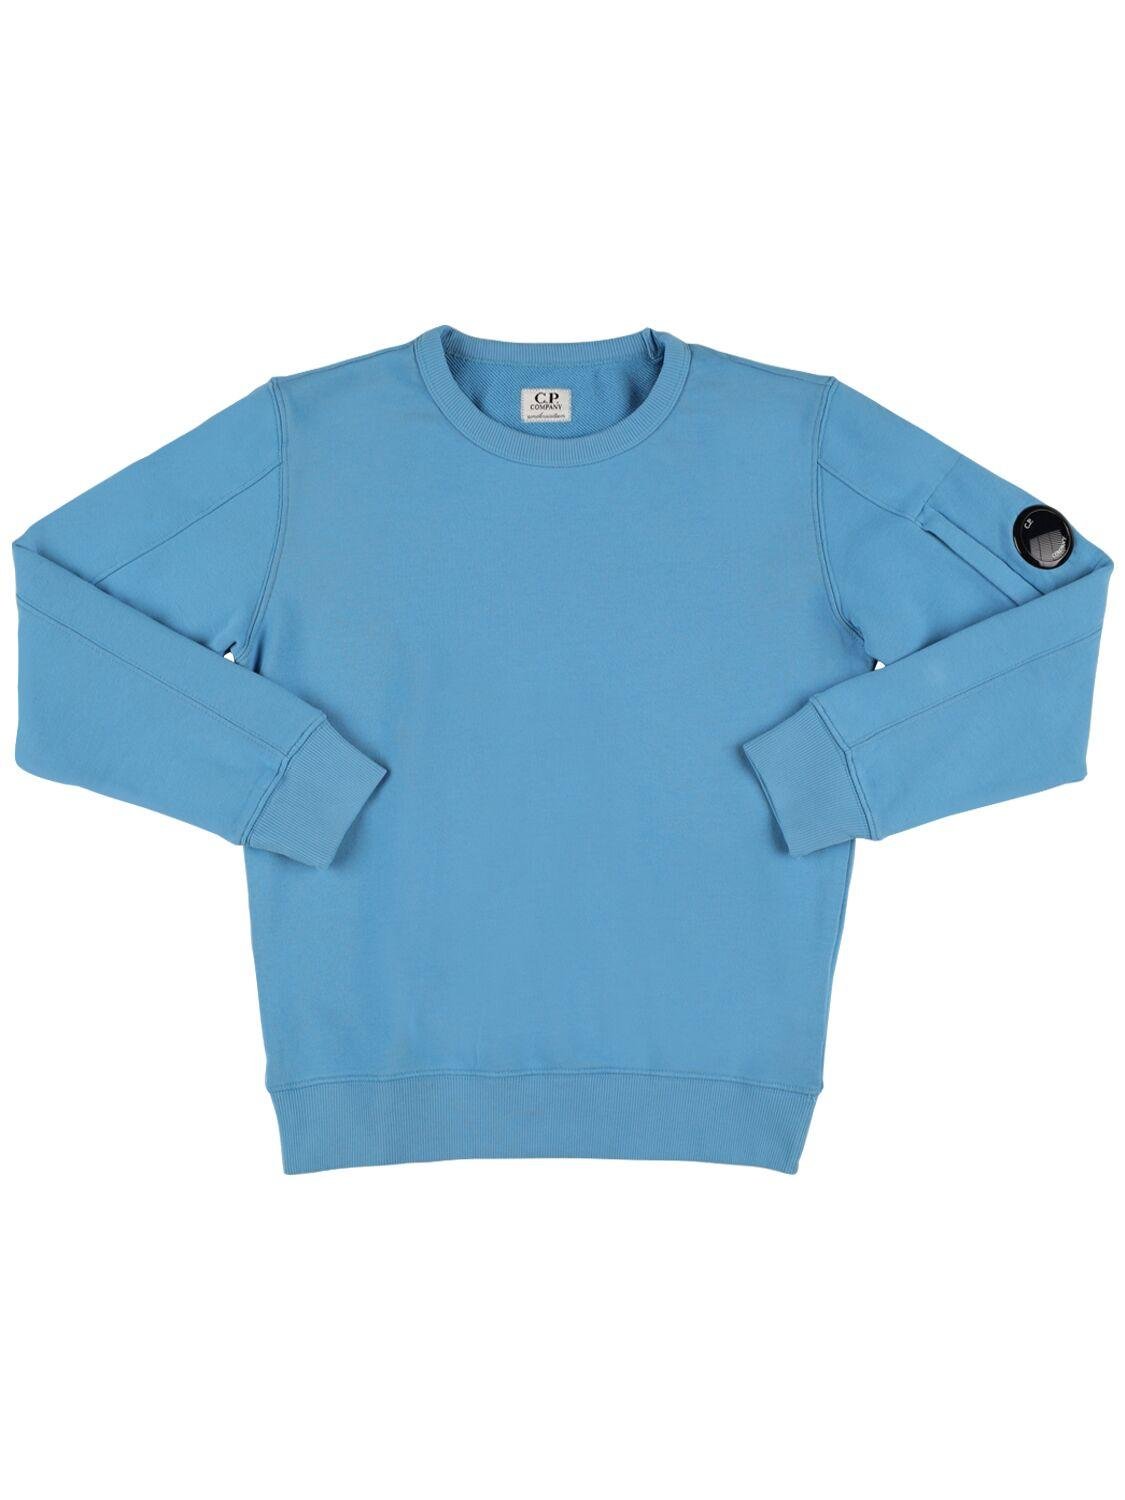 Cotton Crewneck Sweatshirt by C.P. COMPANY